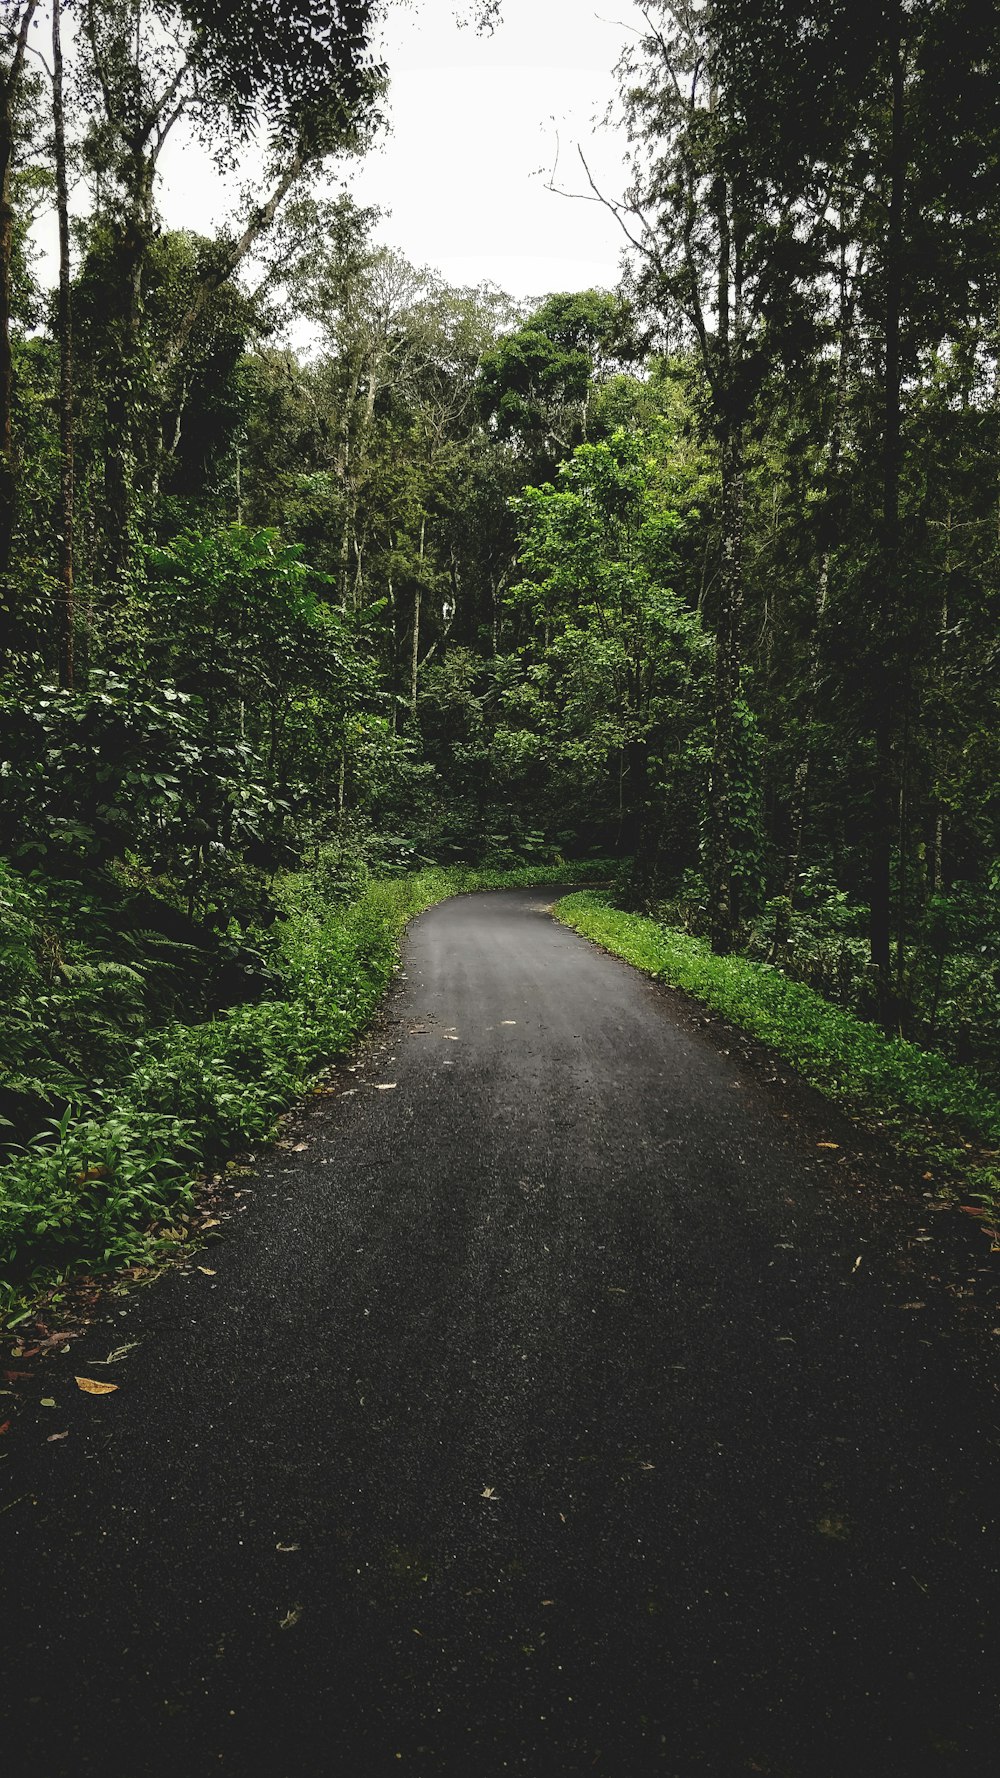 Carretera gris rodeada de árboles verdes